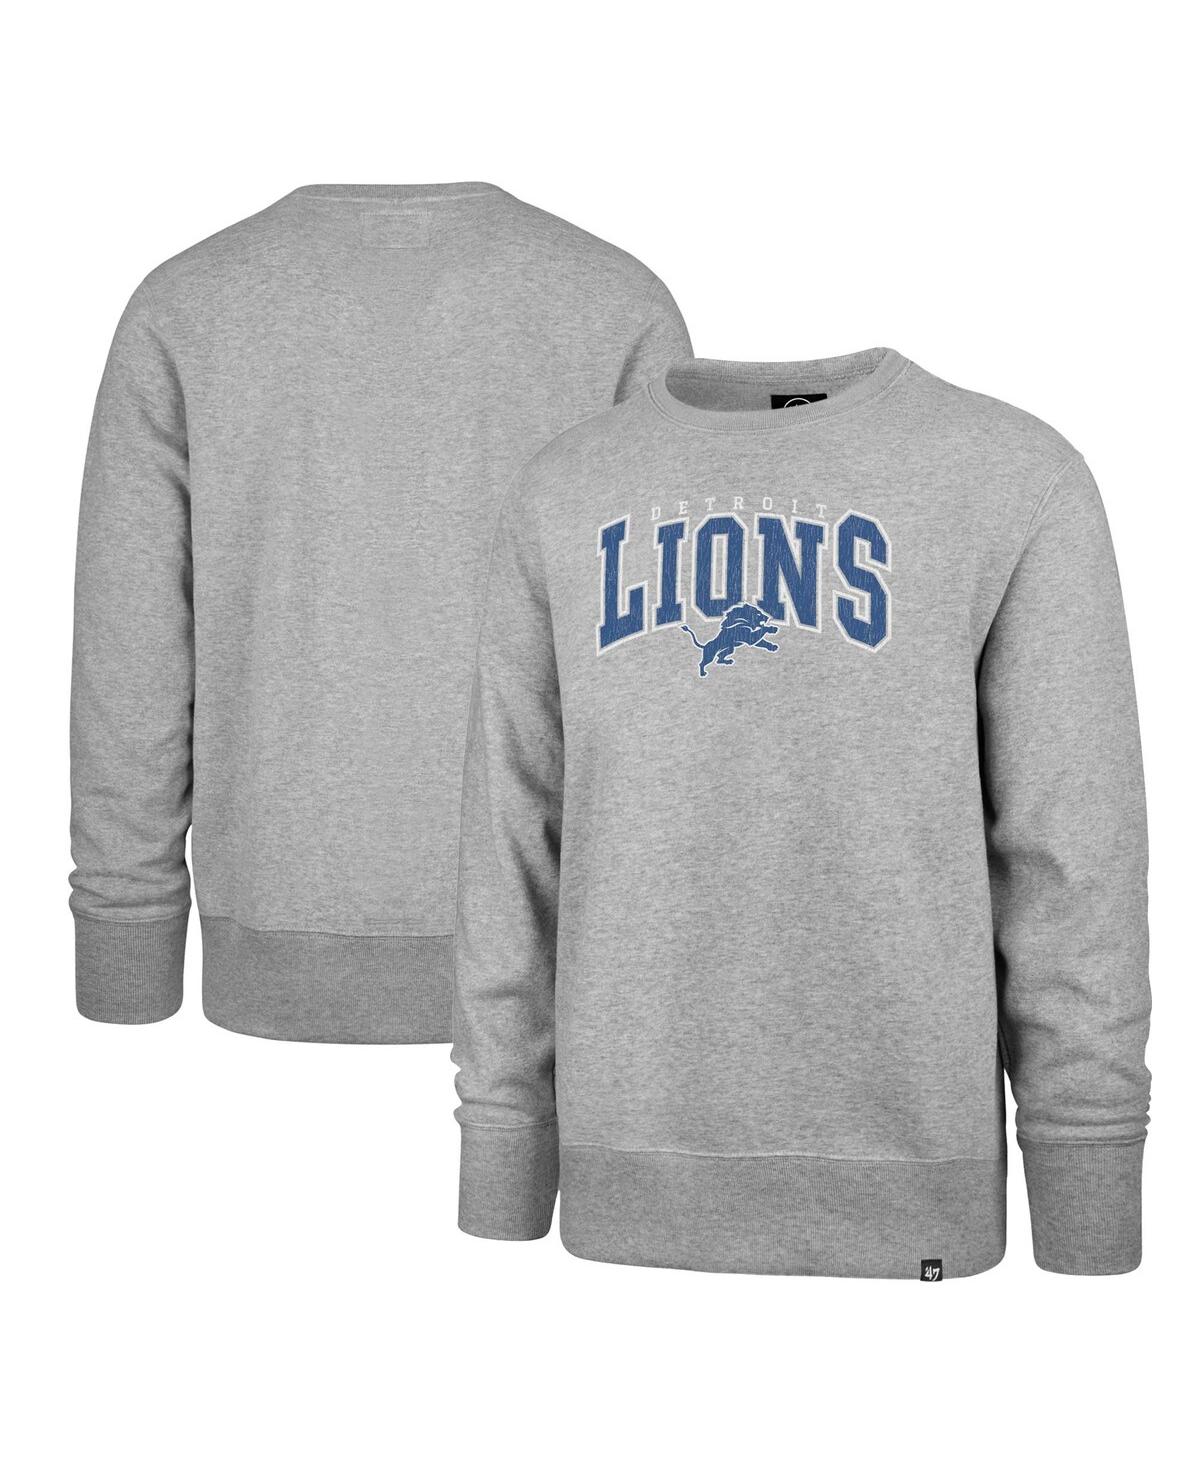 Men's '47 Brand Gray Distressed Detroit Lions Varsity Block Headline Pullover Sweatshirt - Gray